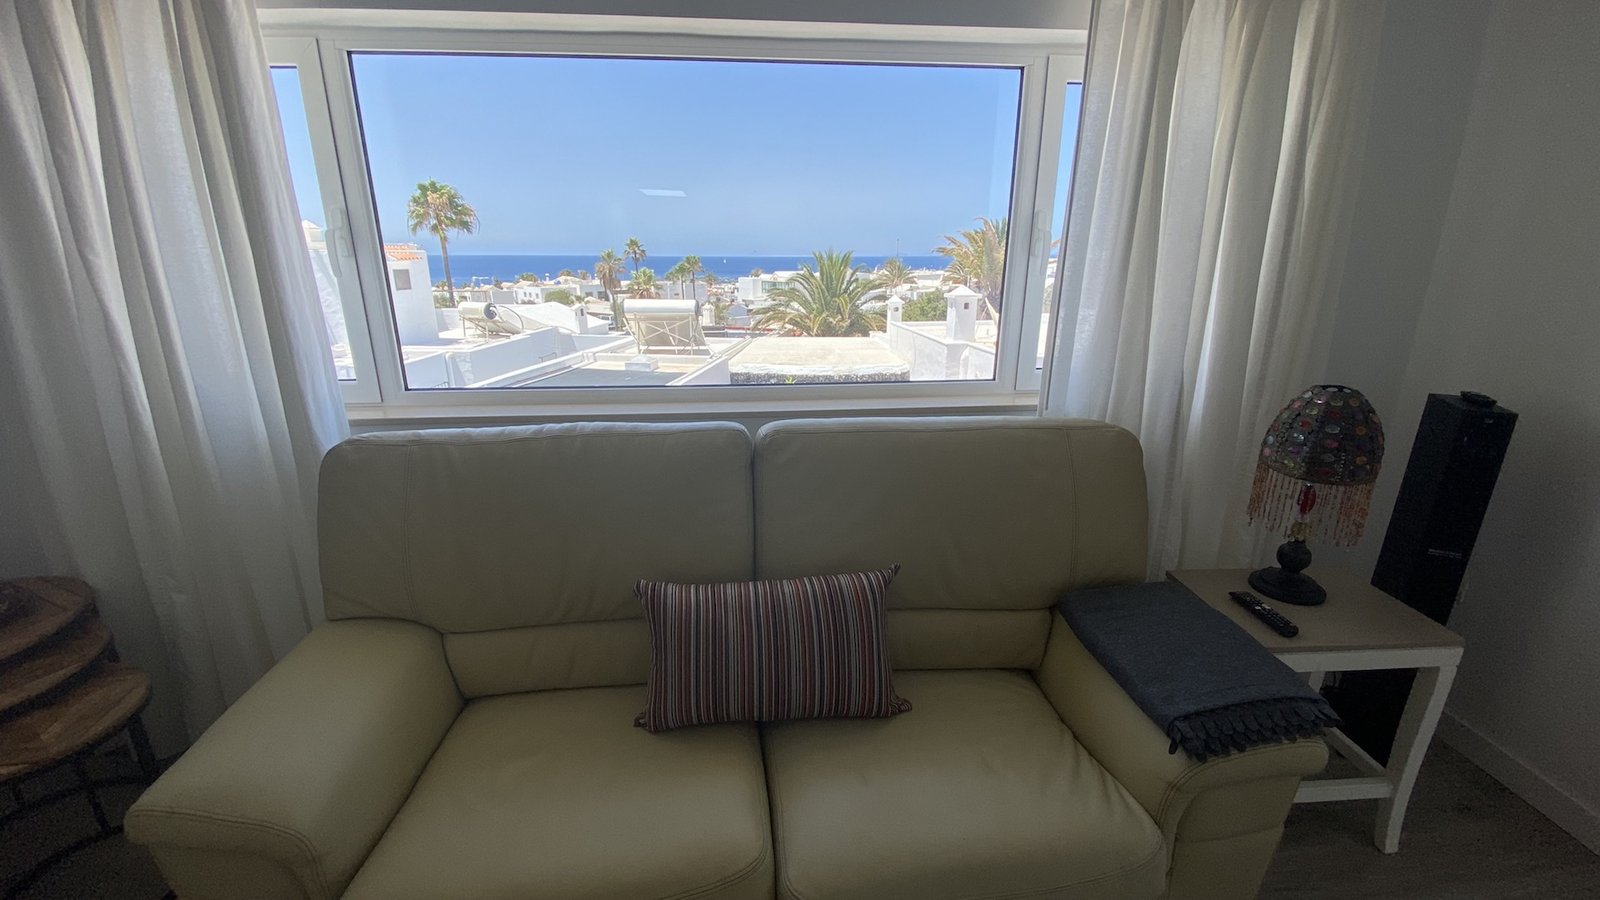 Villa Jessica - Panoramic Sea Views from Living room Area